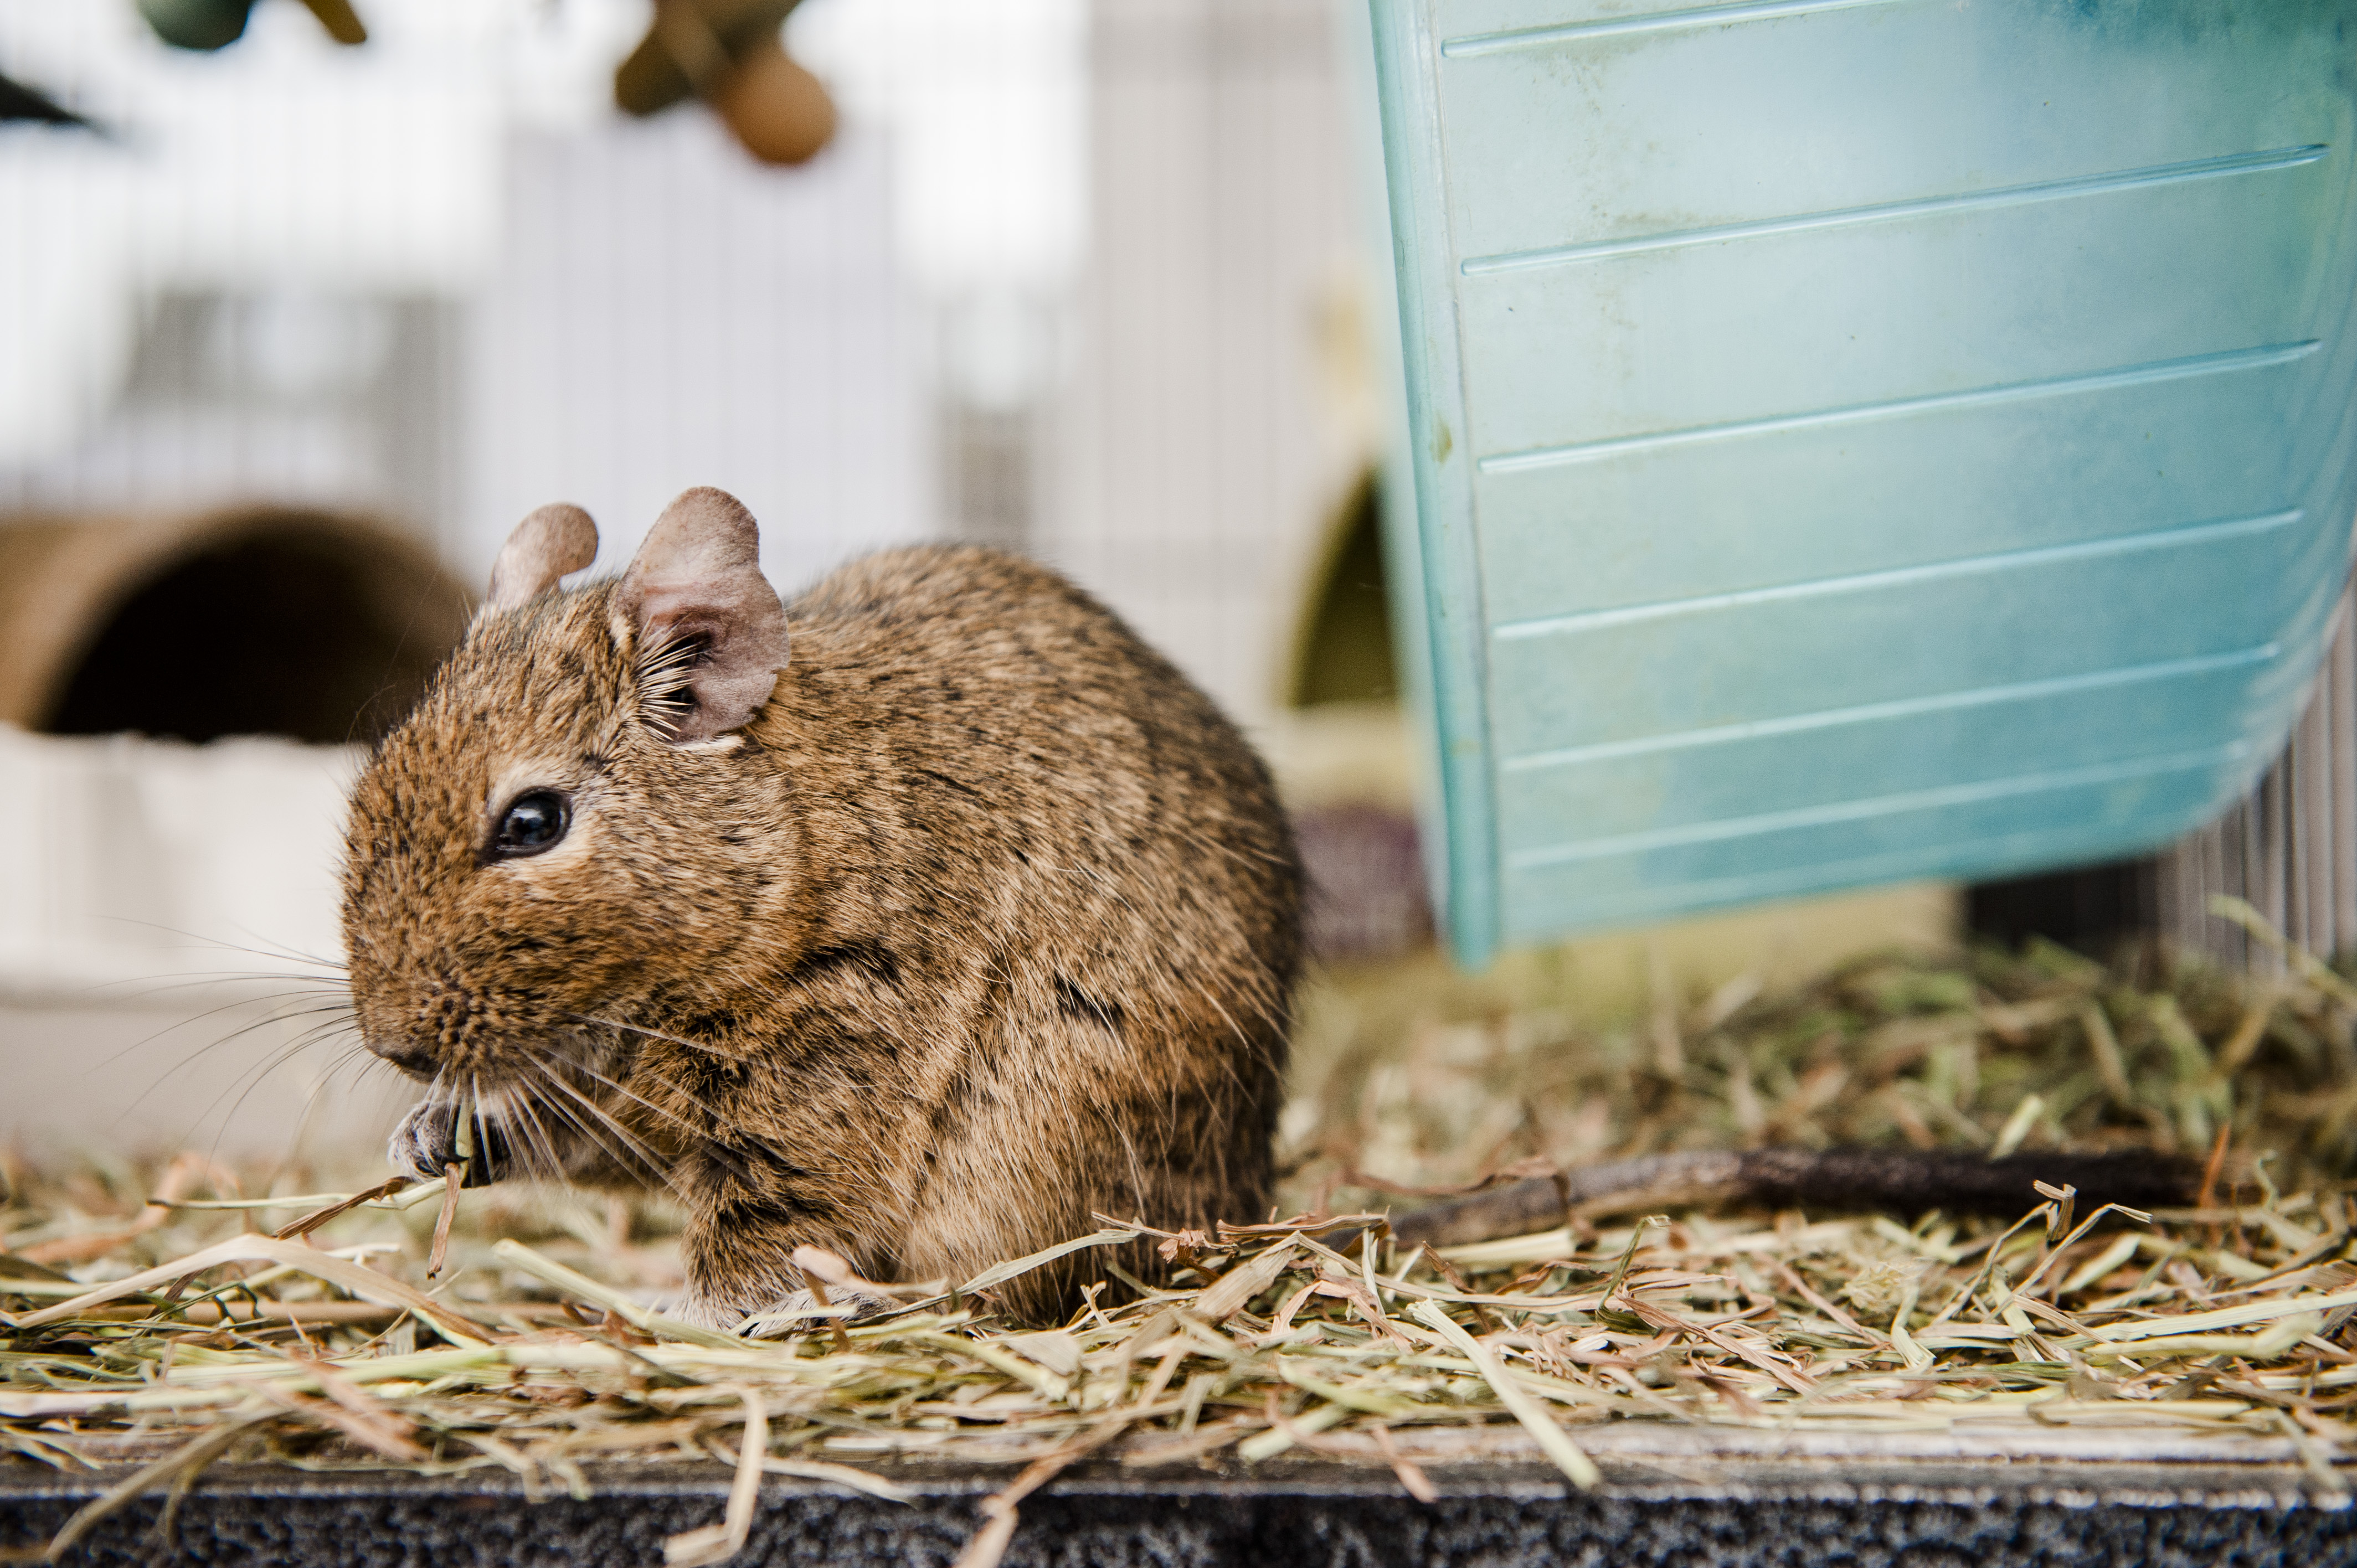 An agouti degu enjoys eating some hay in their accommodation.